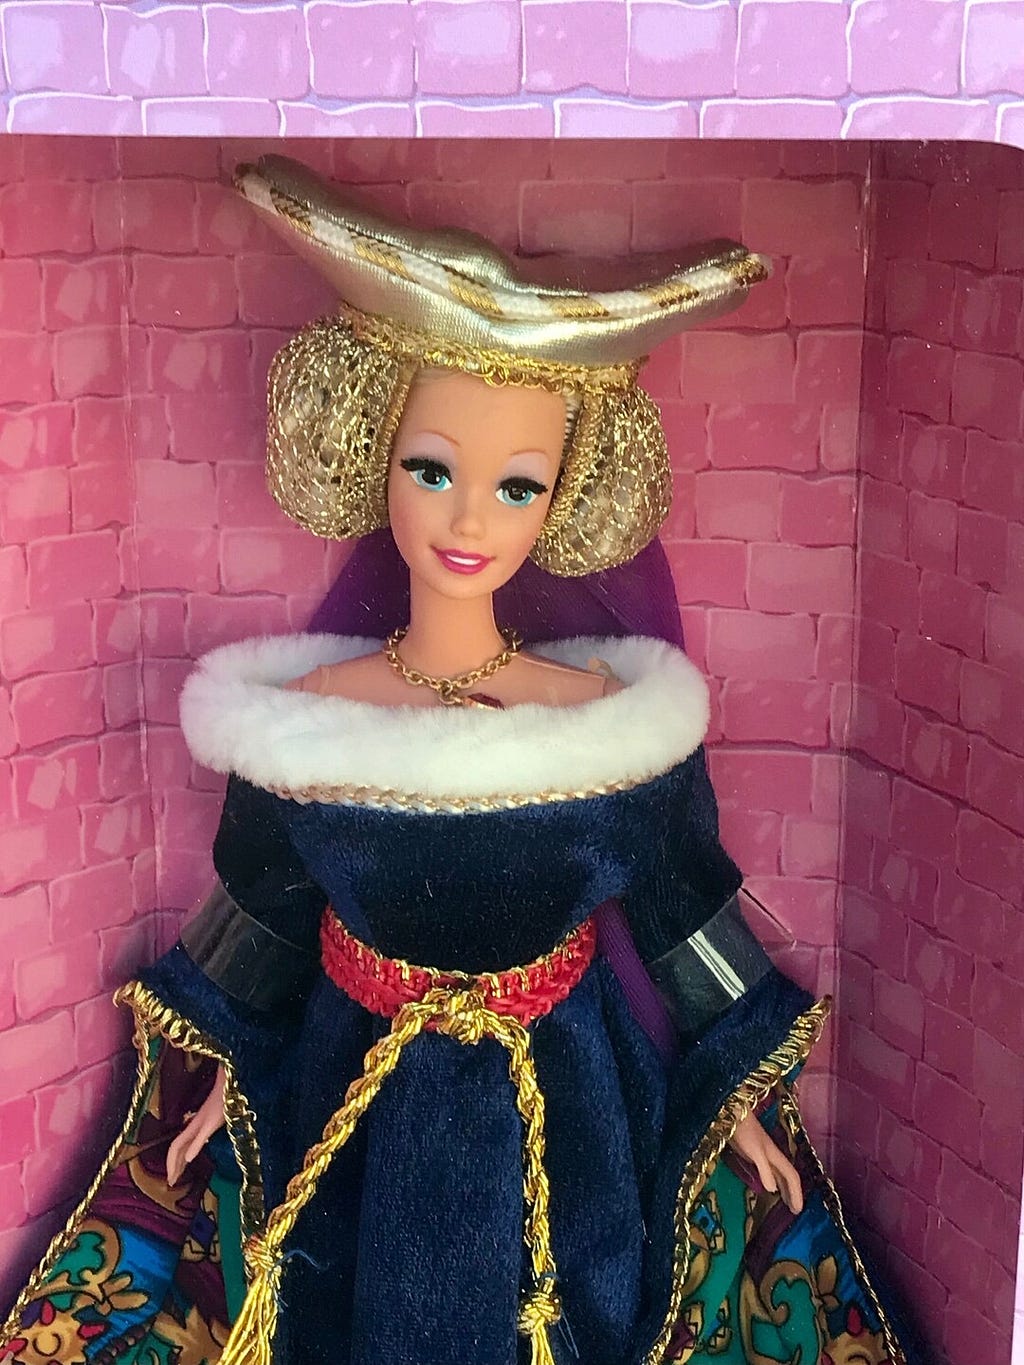 Mattel’s Medieval Barbie dressed in fur-lined blue velvet gown and gold escoffian headdress.